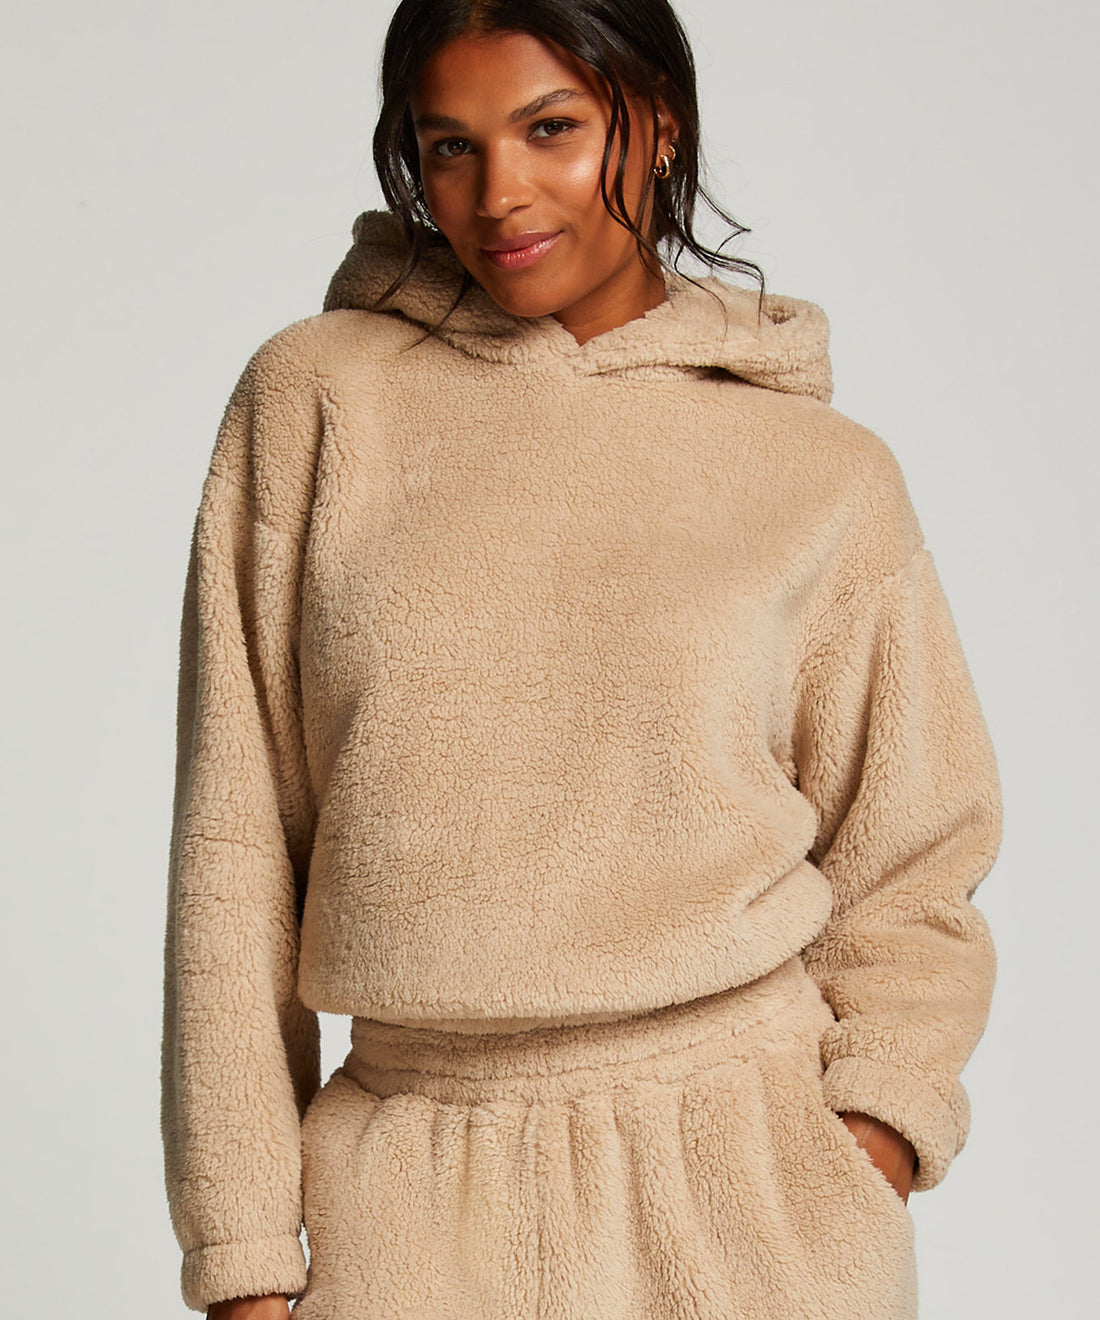 Hoody Long Sleeve Fleece Snuggle_204181_Sand Brown_01